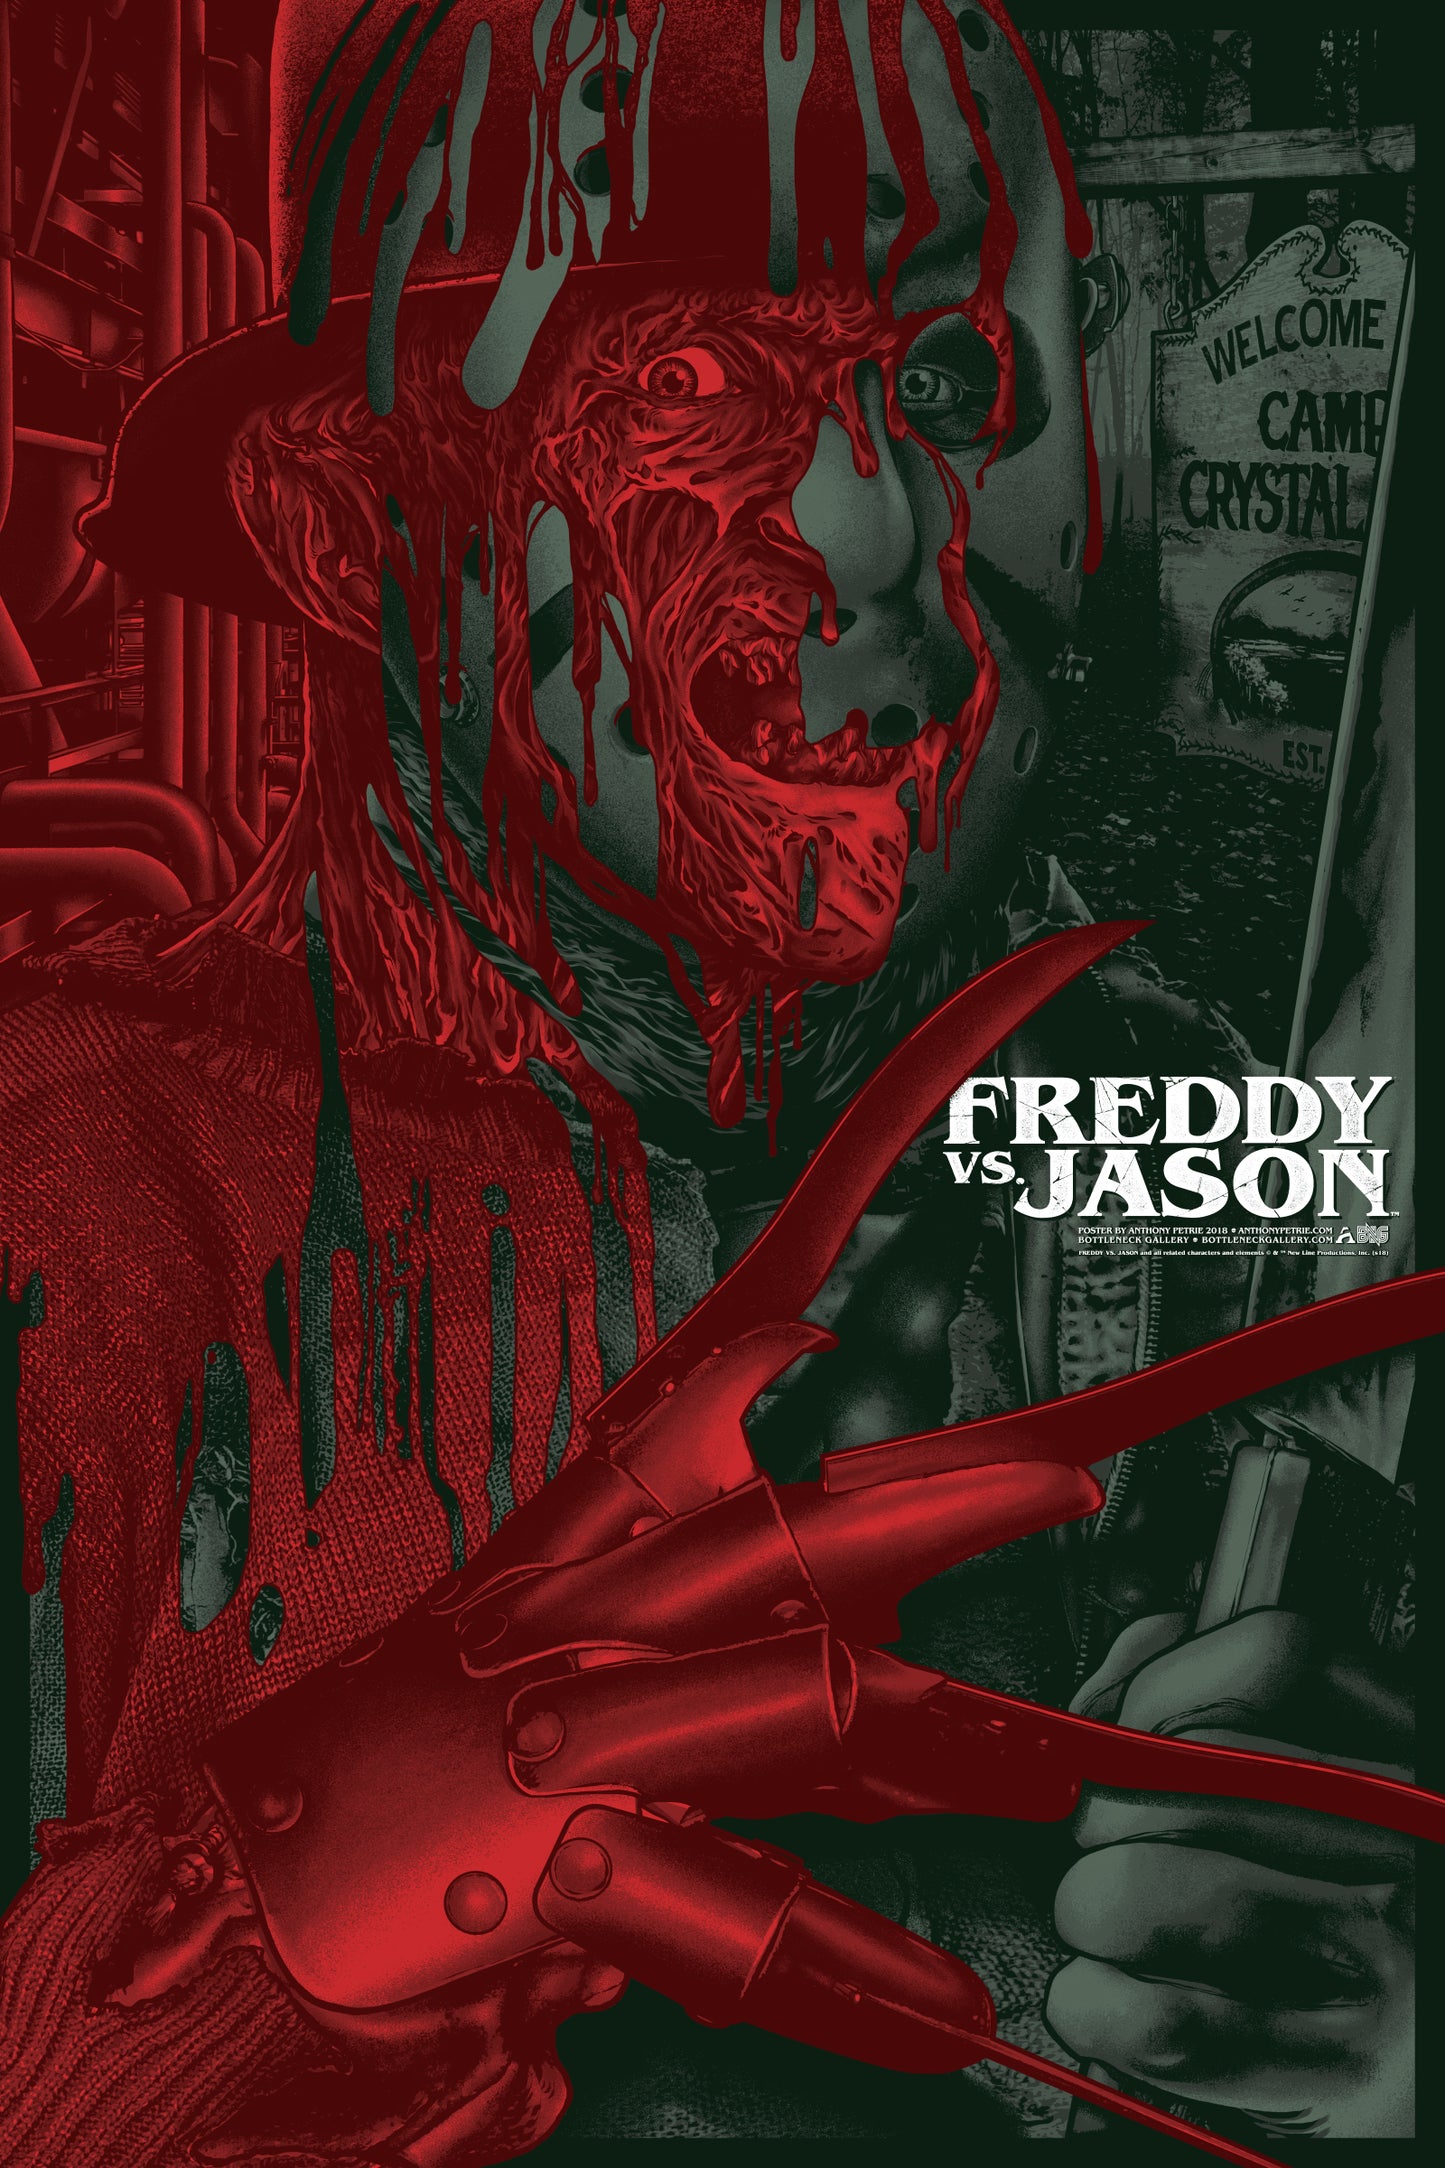 Anthony Petrie "Freddy vs. Jason"